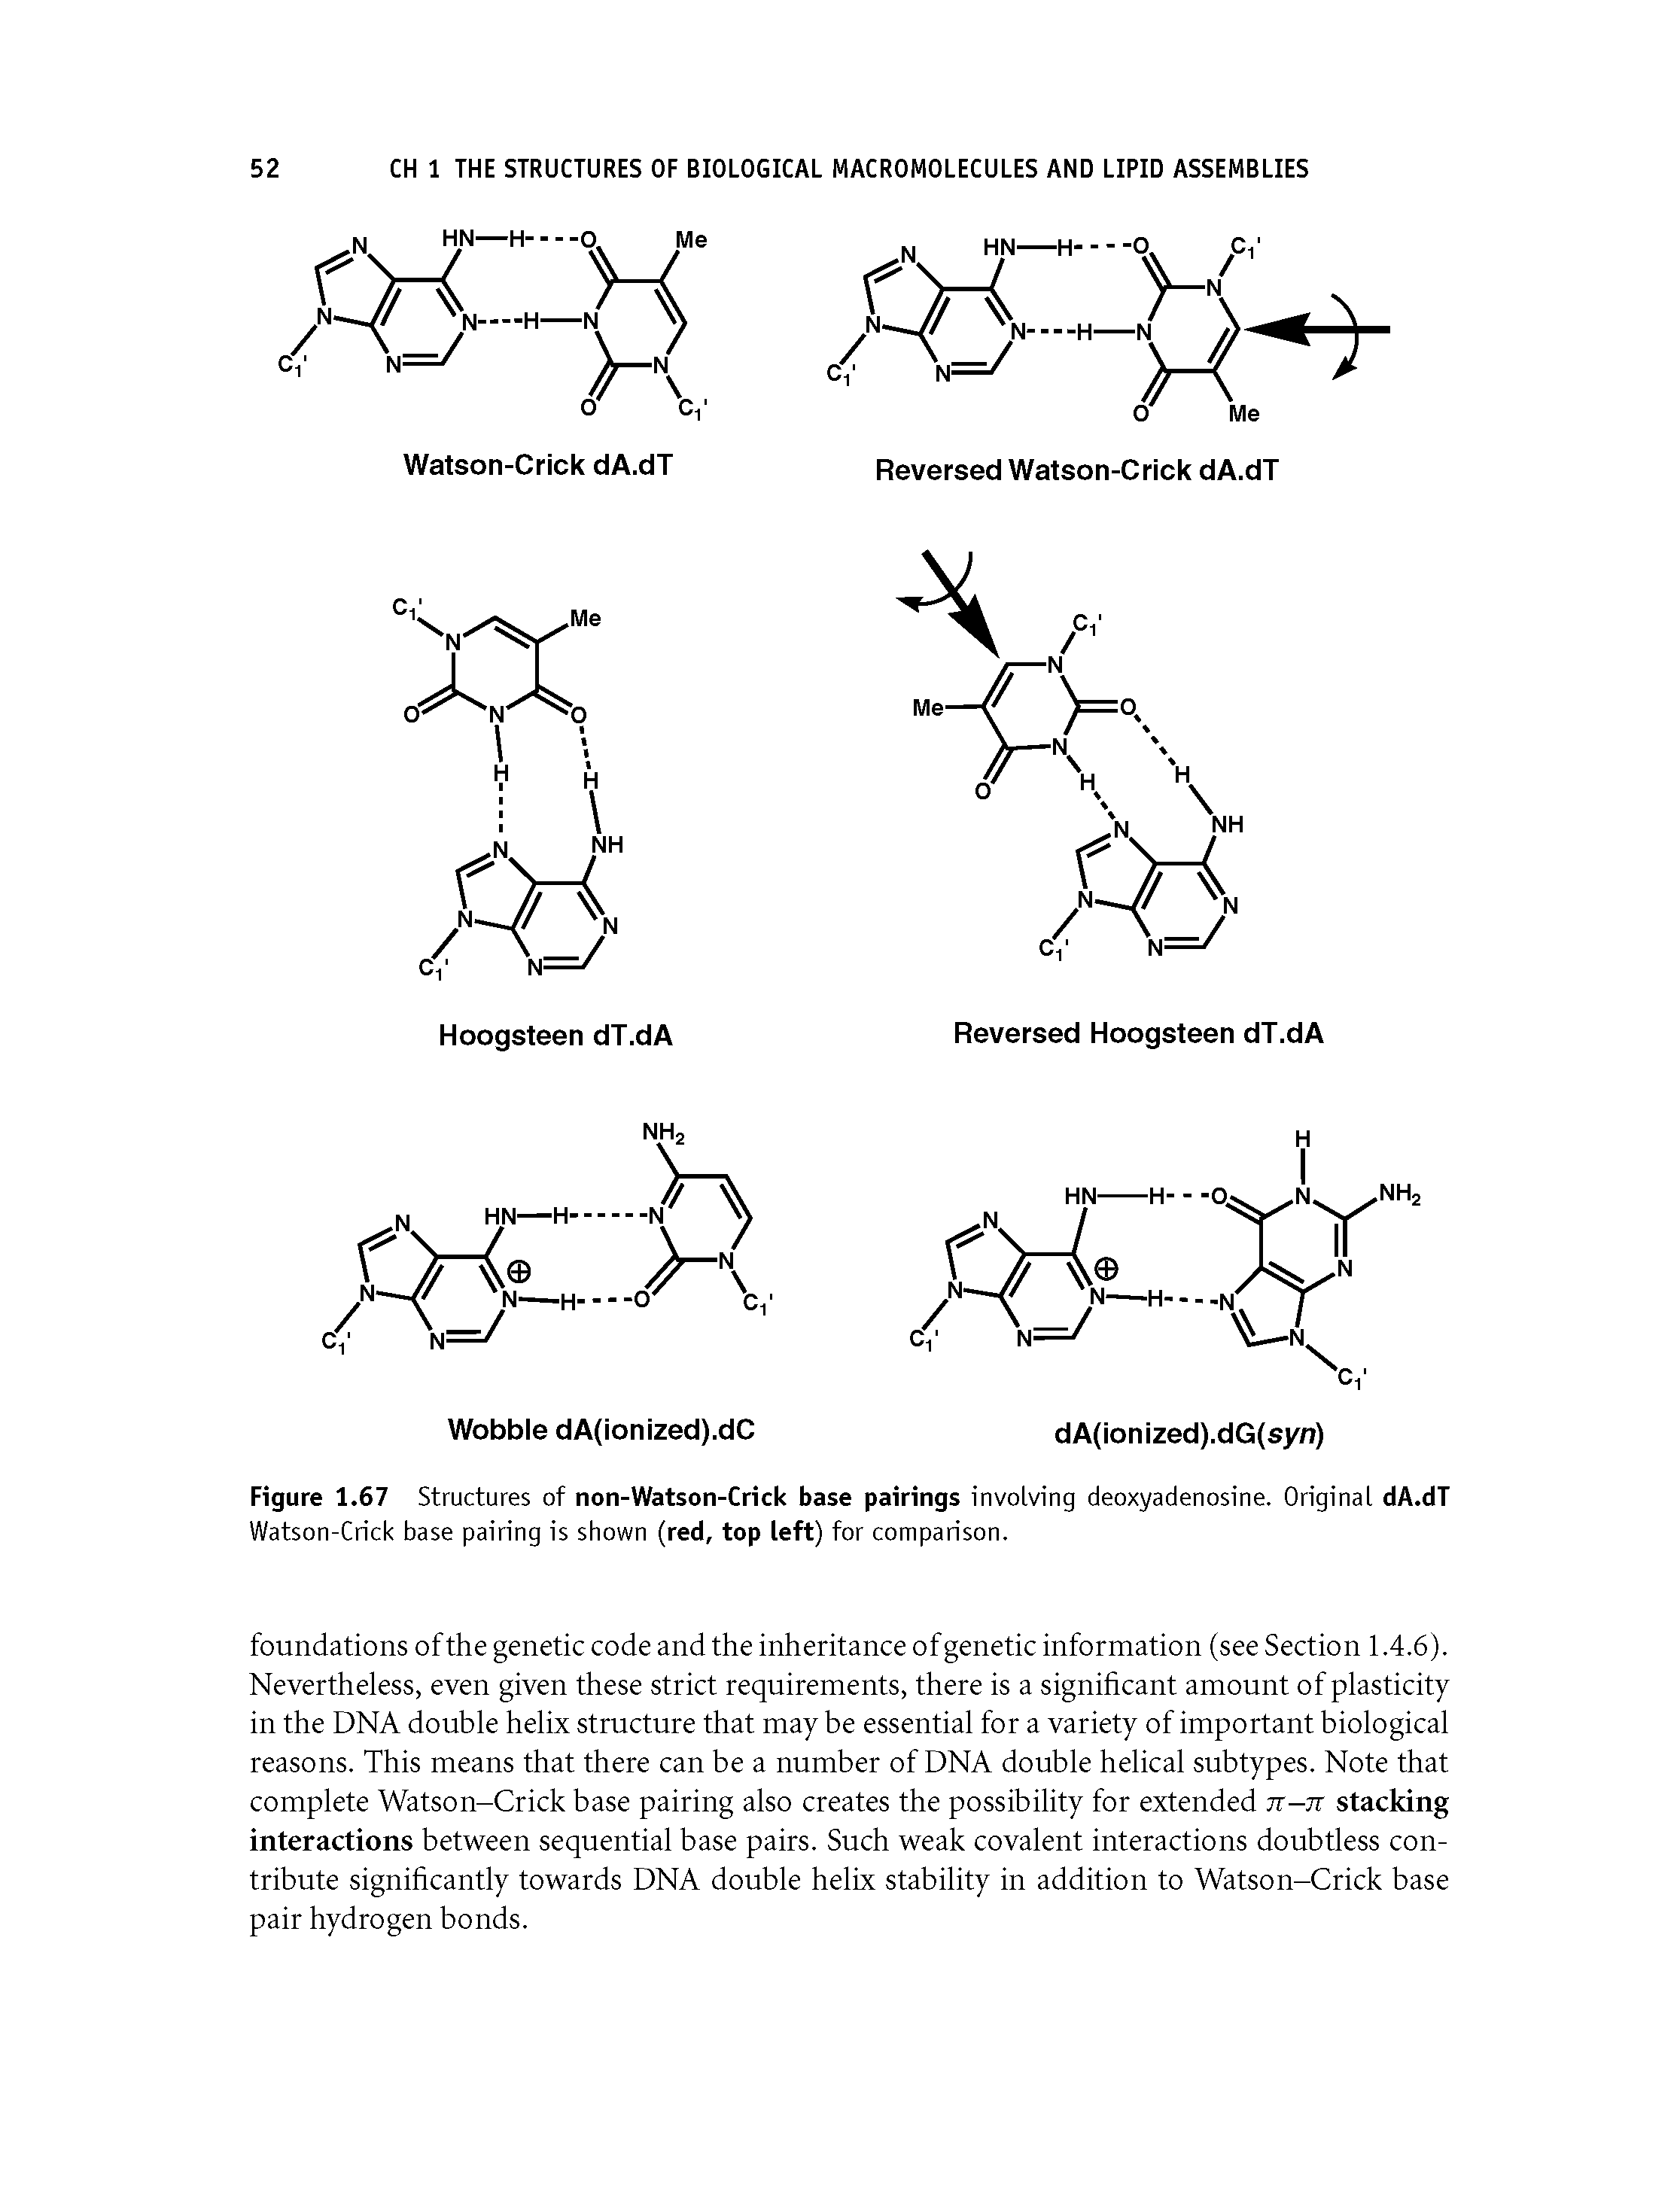 Figure 1.67 Structures of non-Watson-Crick base pairings involving deoxyadenosine. Original dA.dT Watson-Crick base pairing is shown (red, top left) for comparison.